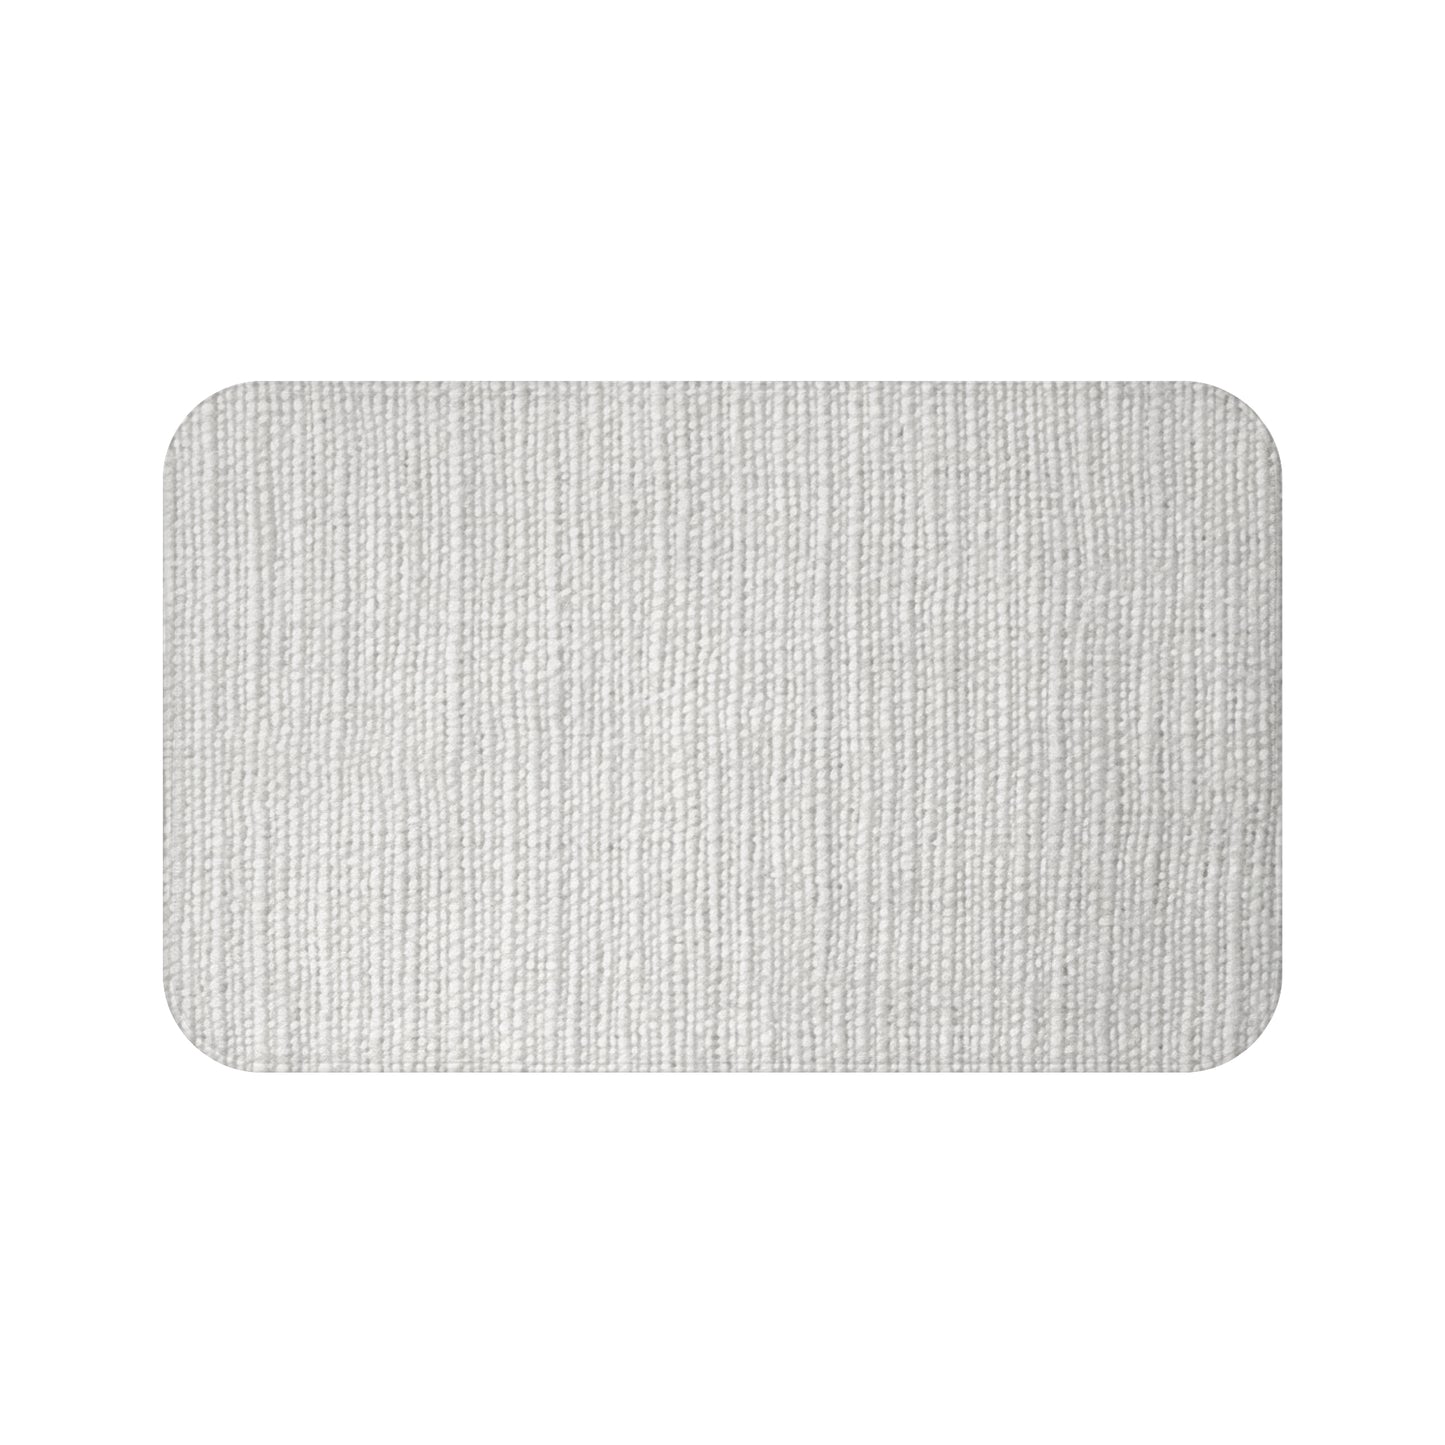 Chic White Denim-Style Fabric, Luxurious & Stylish Material - Bath Mat